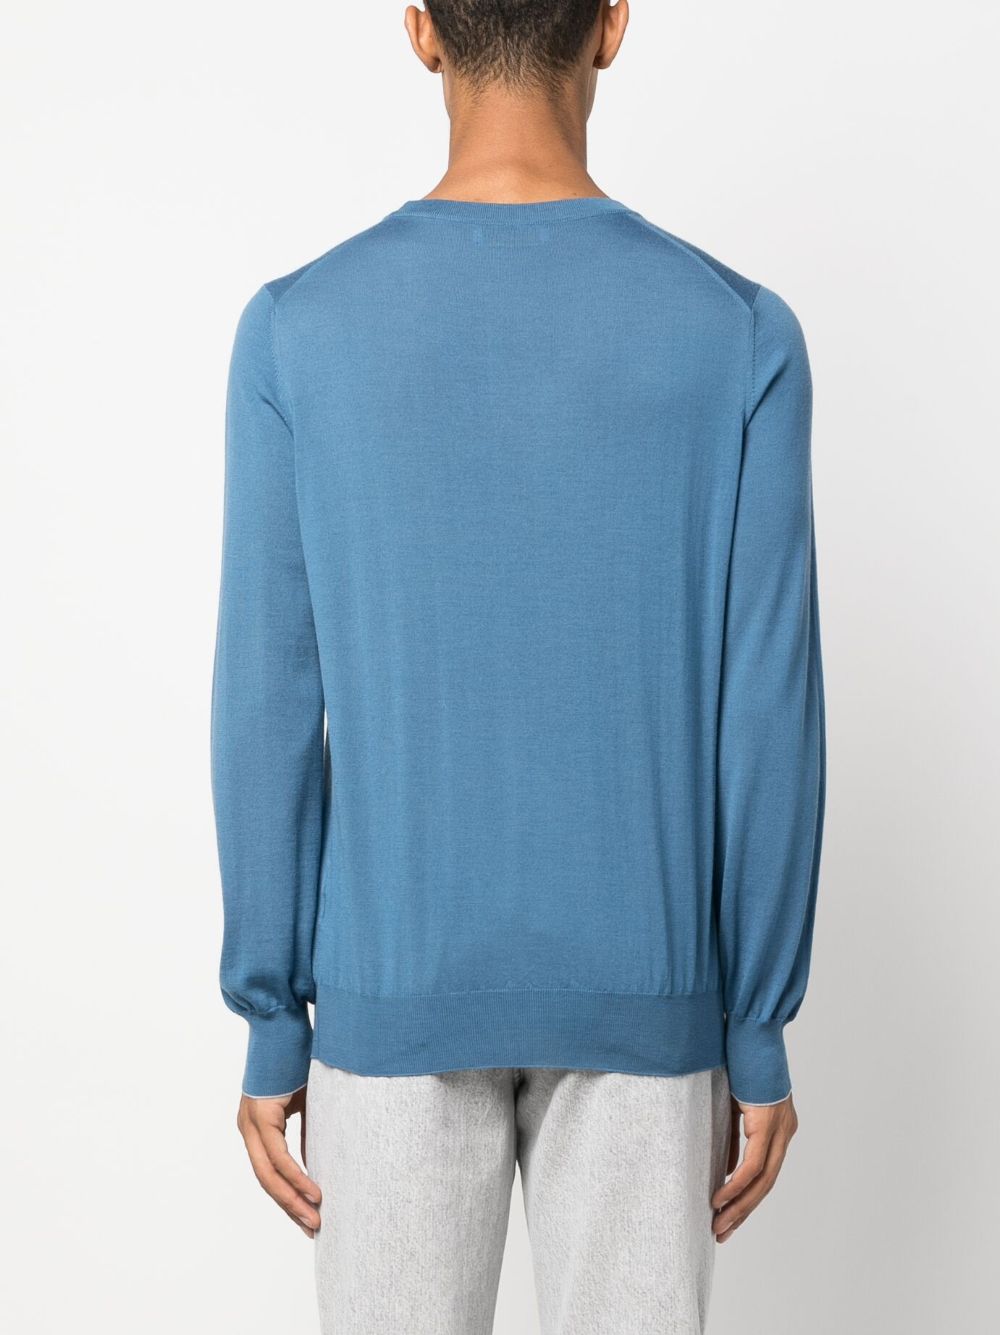 Brunello Cucinelli Sweater in Imperial Blue